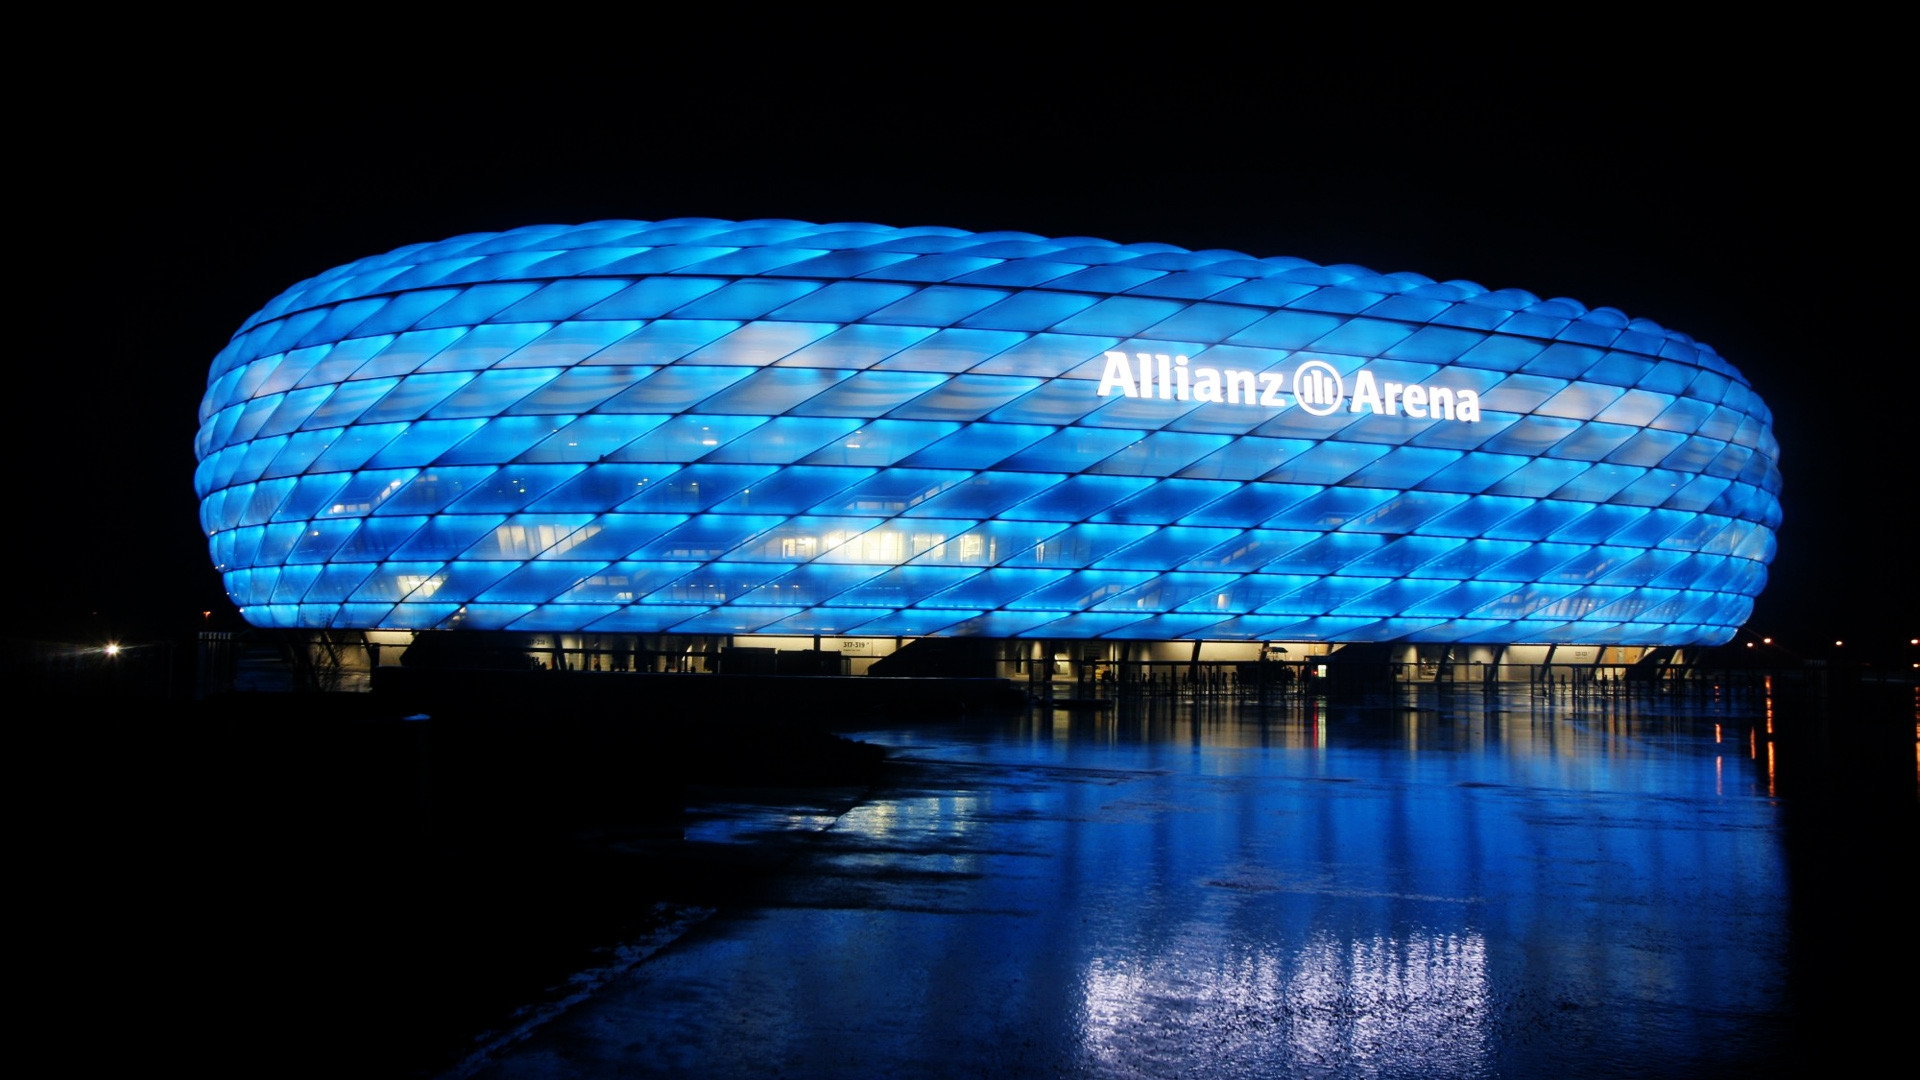 The Allianz Arena Munich for 1920 x 1080 HDTV 1080p resolution